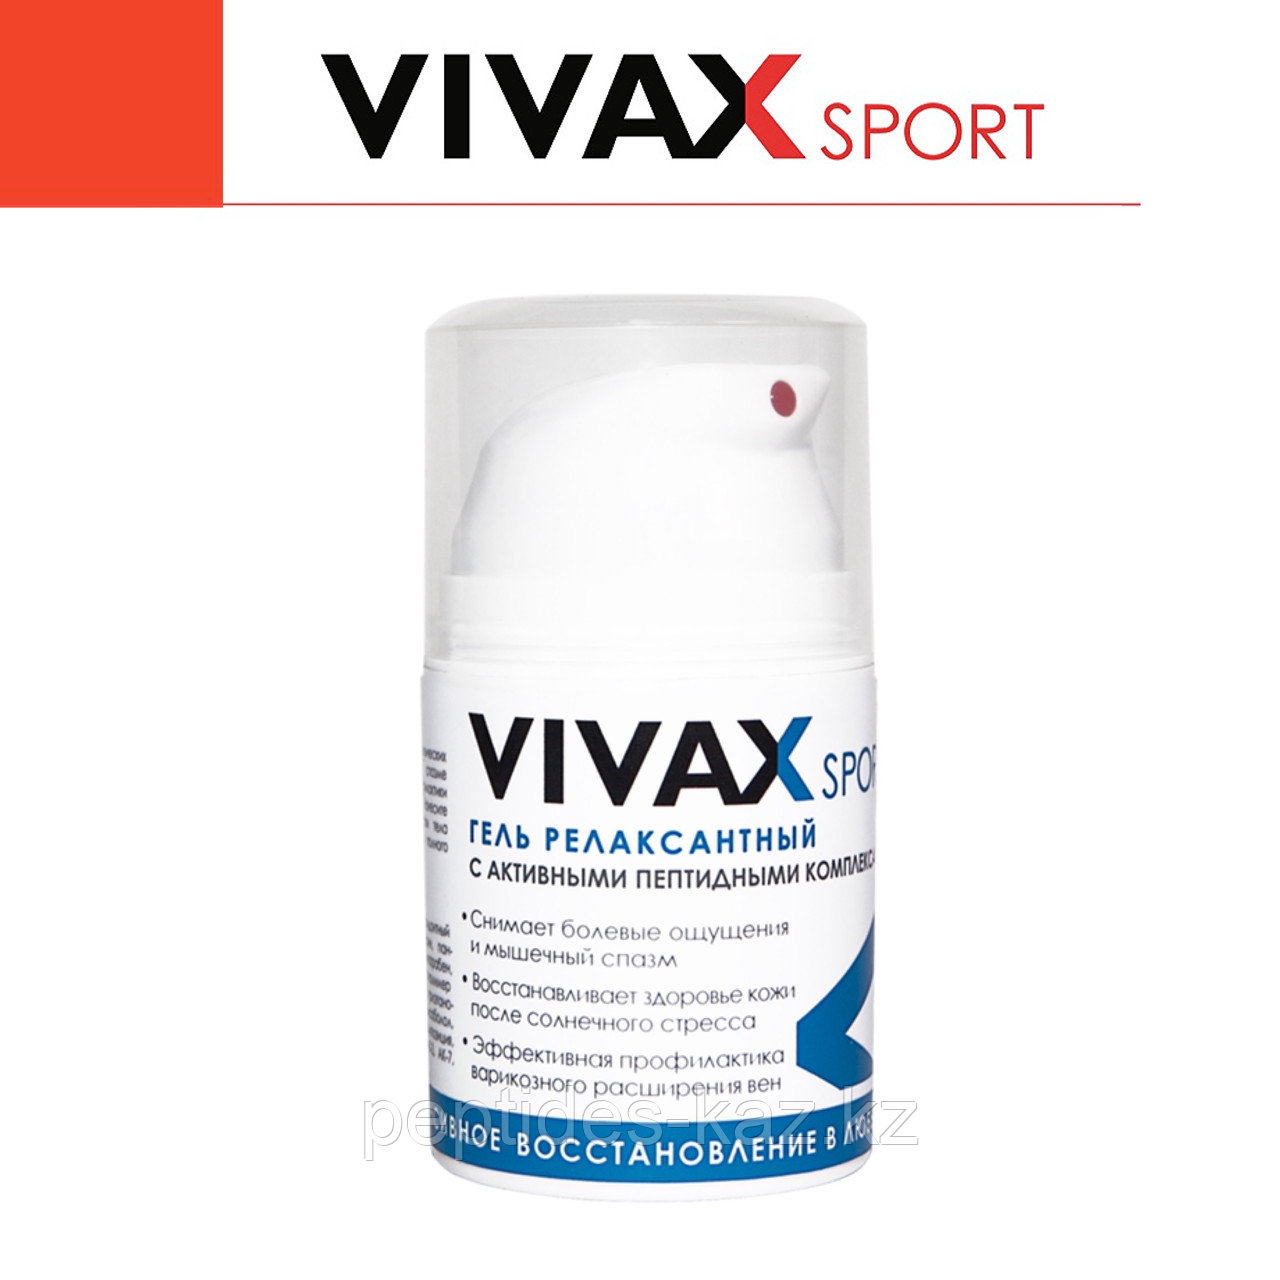 VIVAX SPORT Релаксантный крем с пептидами 50 мл